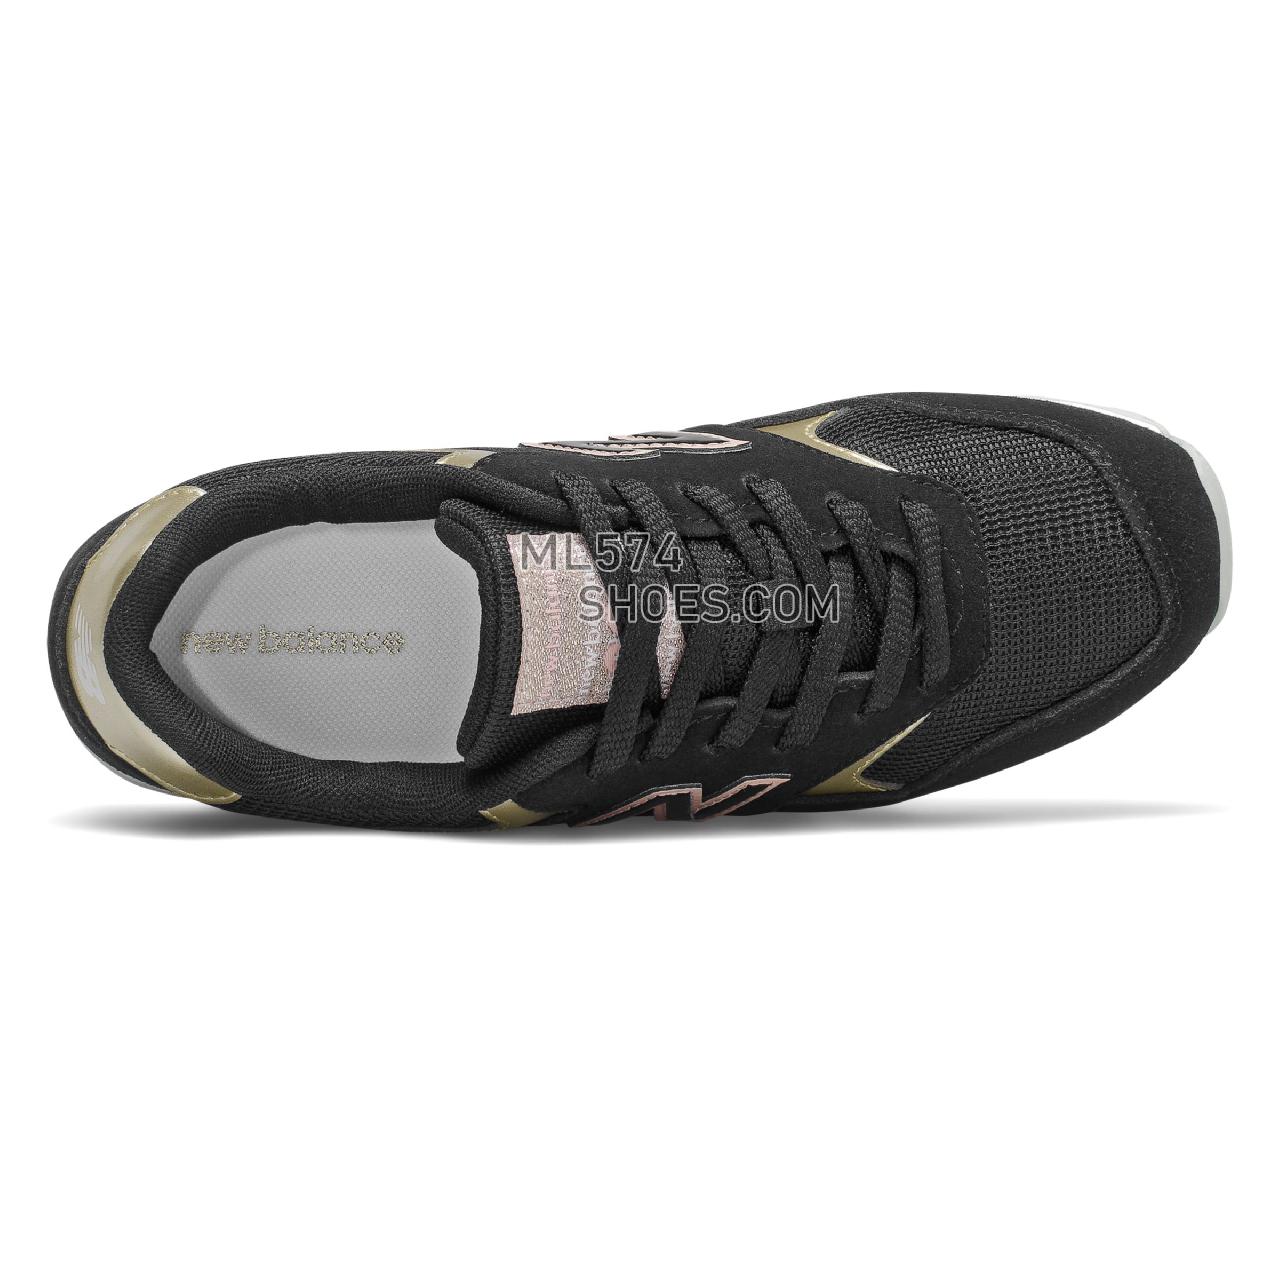 New Balance 393 - Women's Classic Sneakers - Black with Light Gold Metallic - WL393MTL